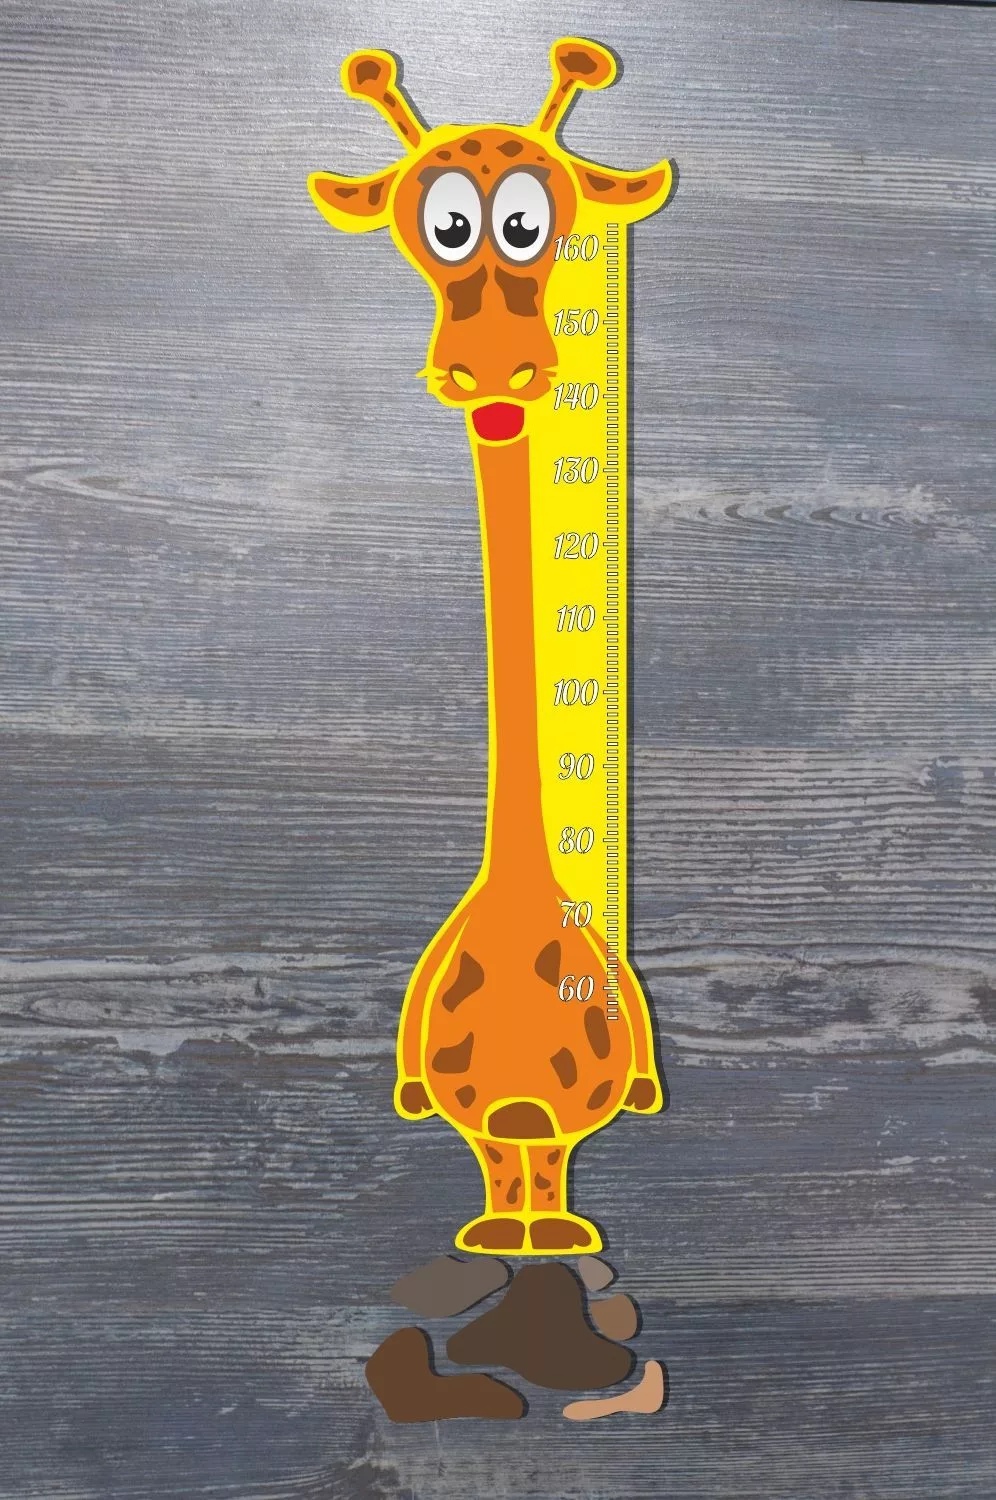 Modelo de girafa com medidor de altura infantil cortado a laser